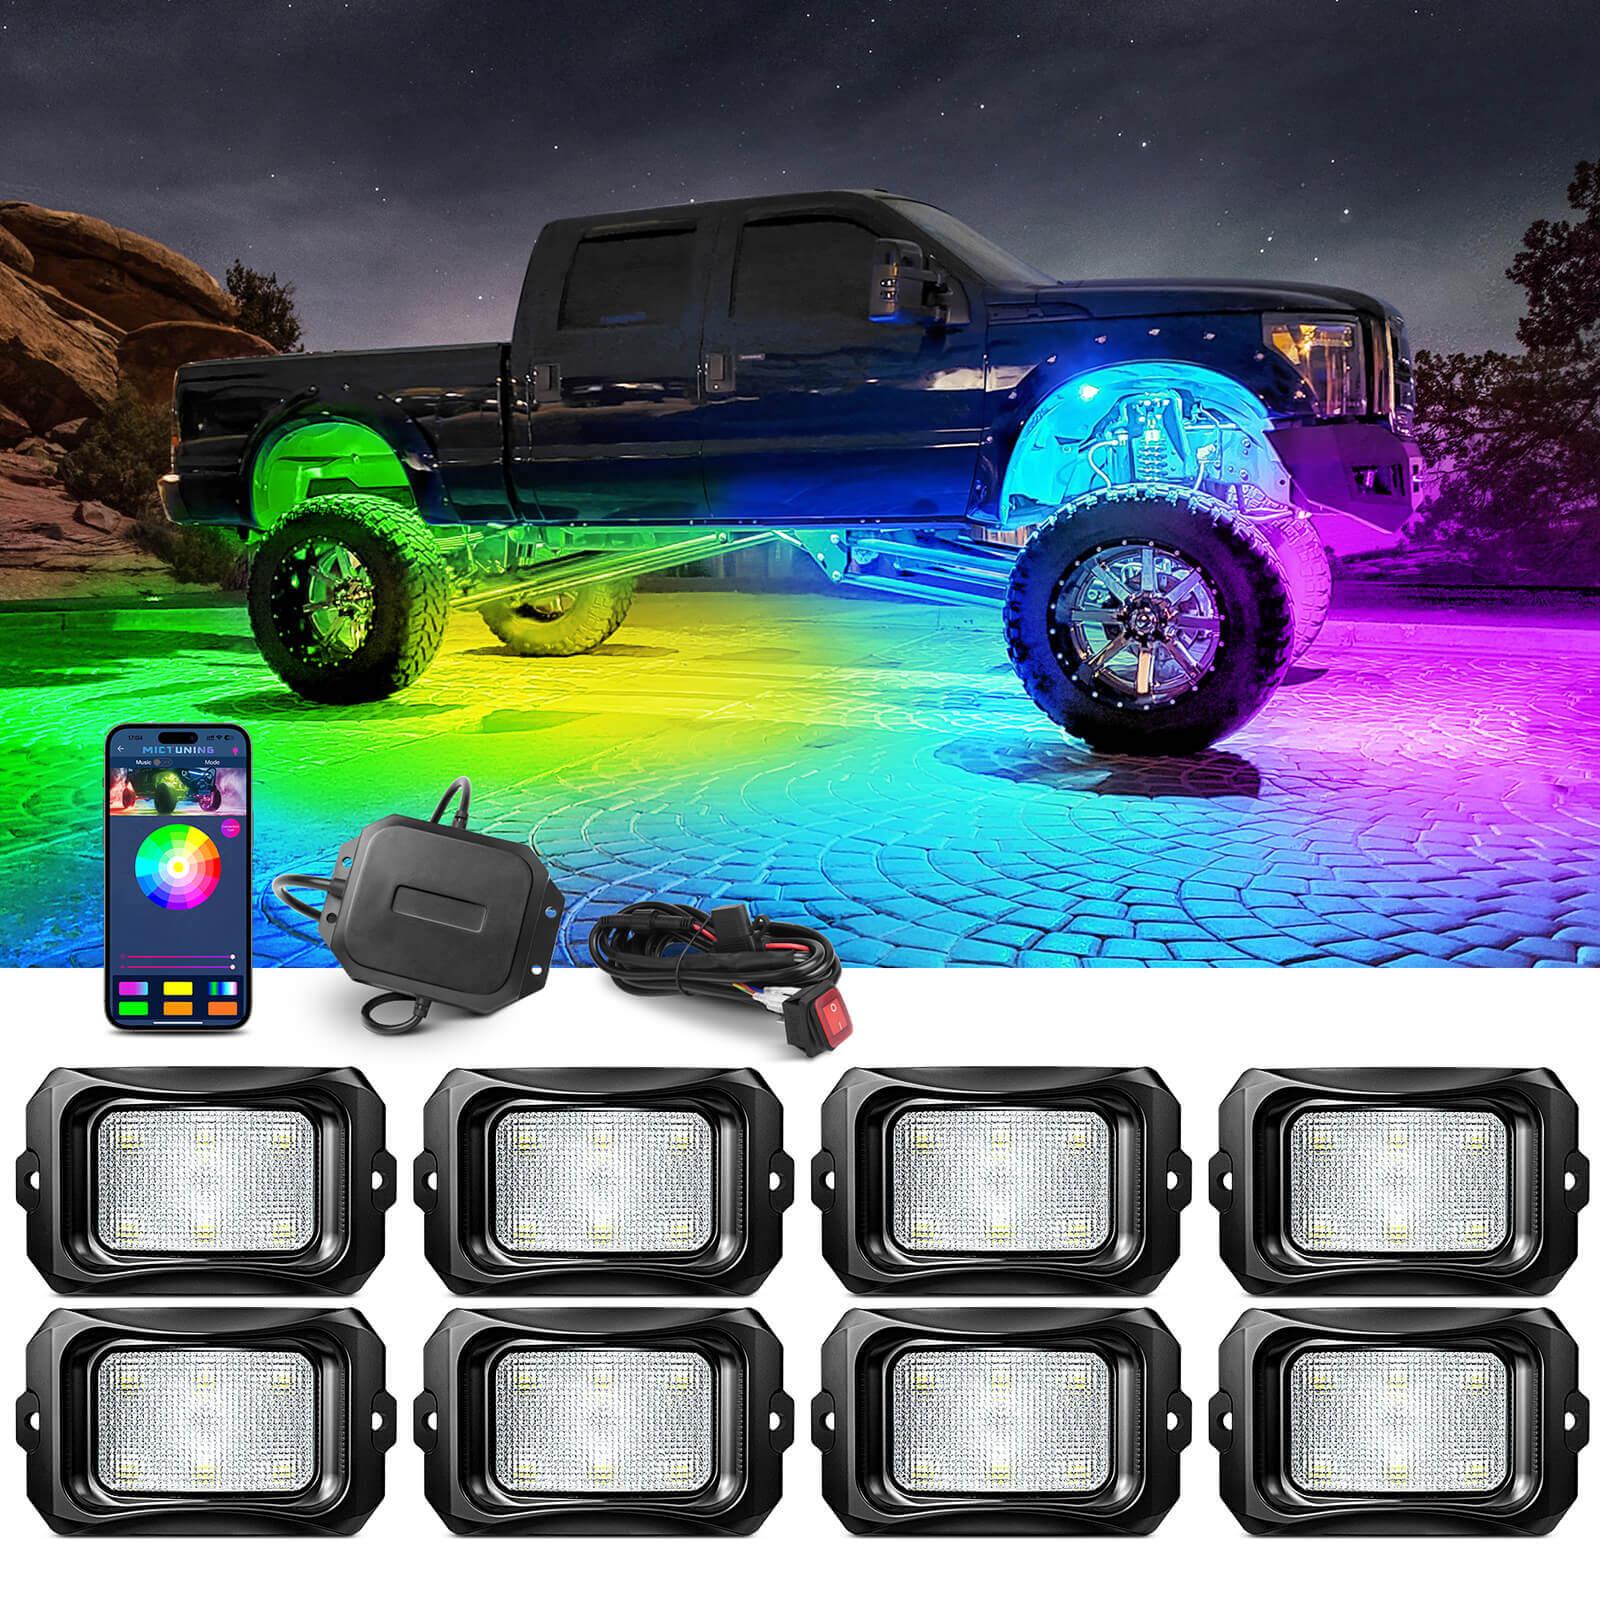 C2 RGB+IC LED Rock Lights Kit, 2-24 Pods, Dynamic Lighting Modes, IP68 Waterproof